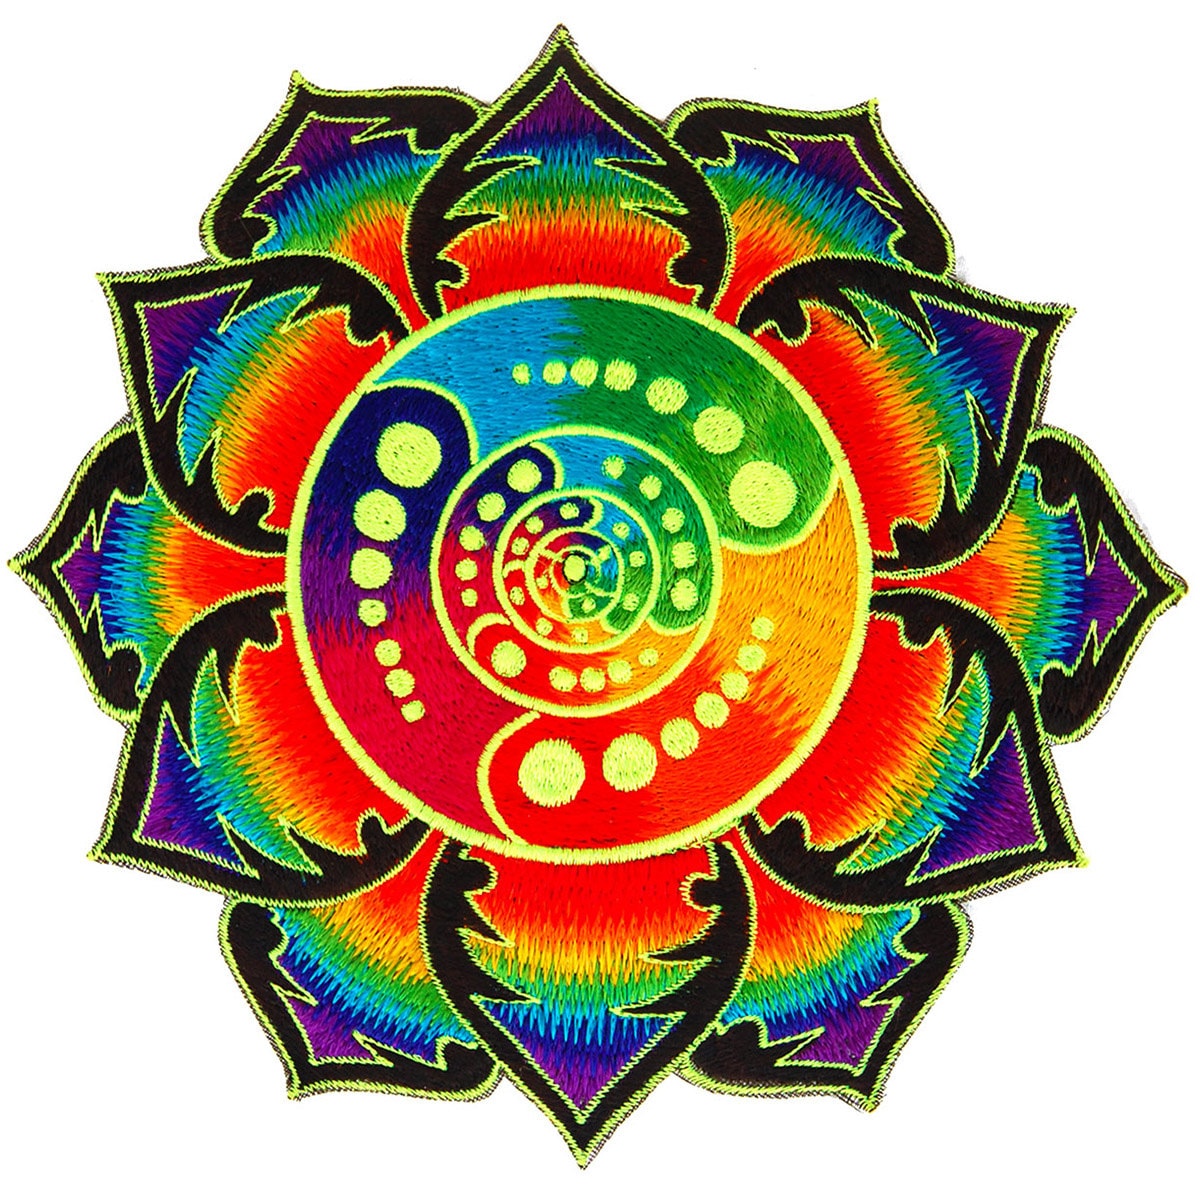 Attributes crop circle T-Shirt rainbow mandala blacklight handmade embroidery no print psy t-shirt